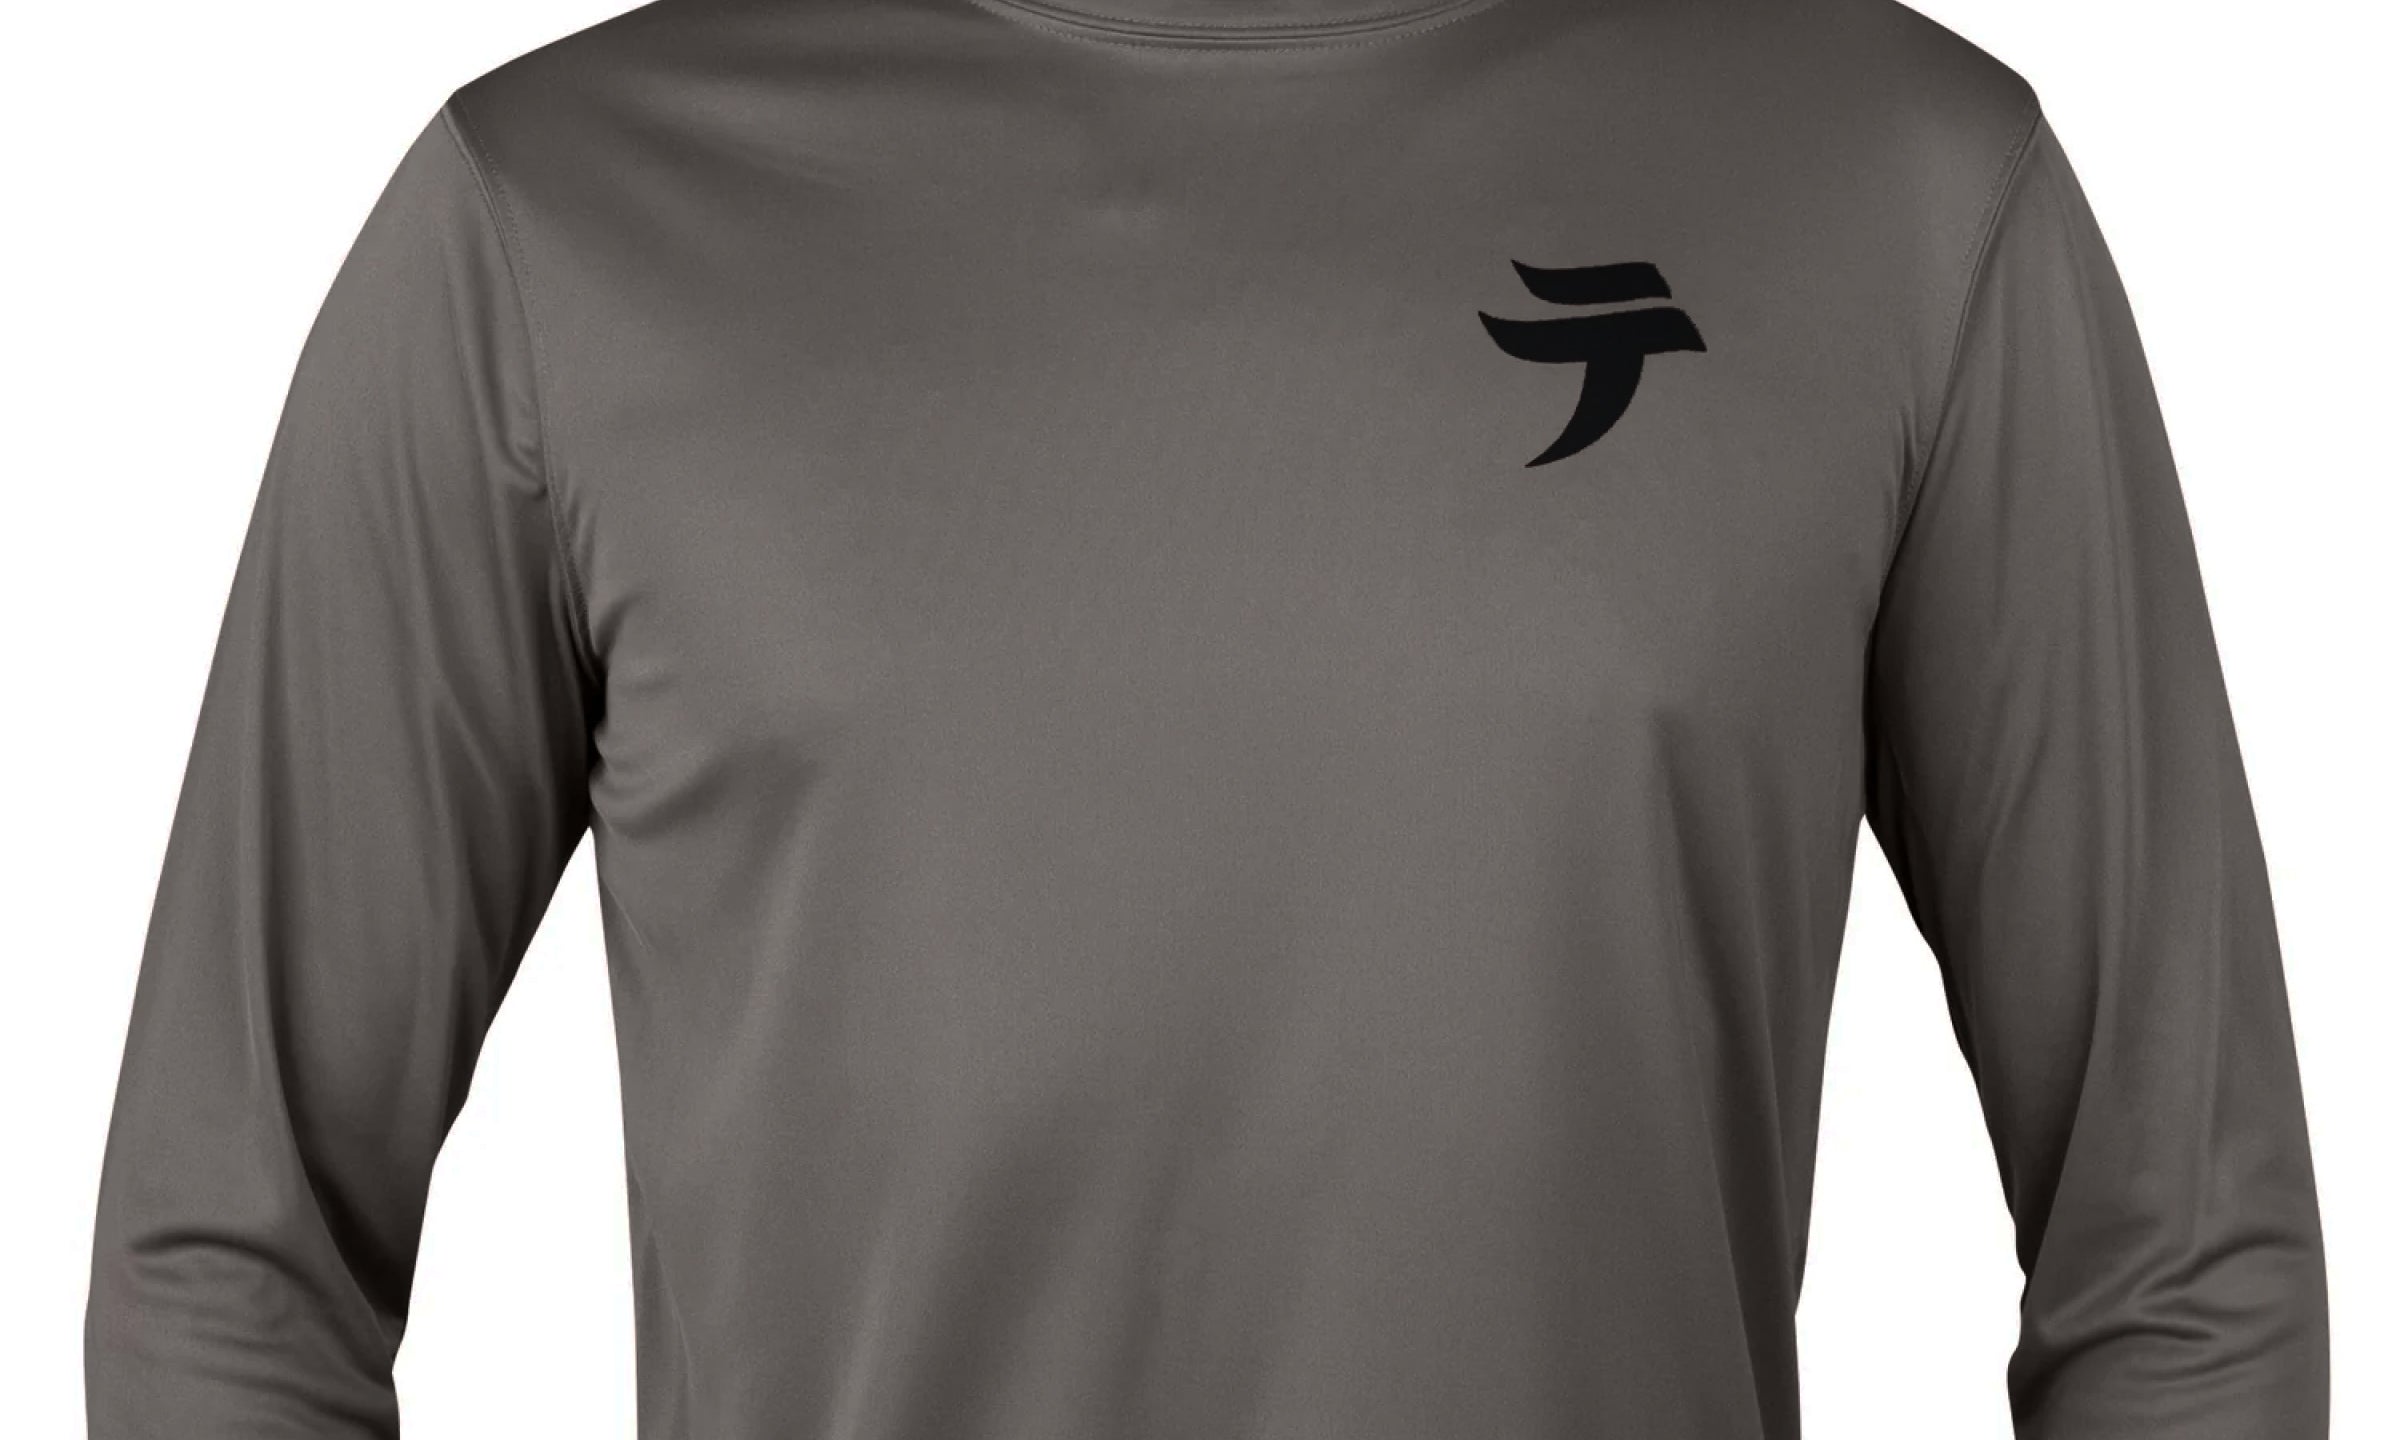 Tenkara USA Long Sleeve Shirt Men's.